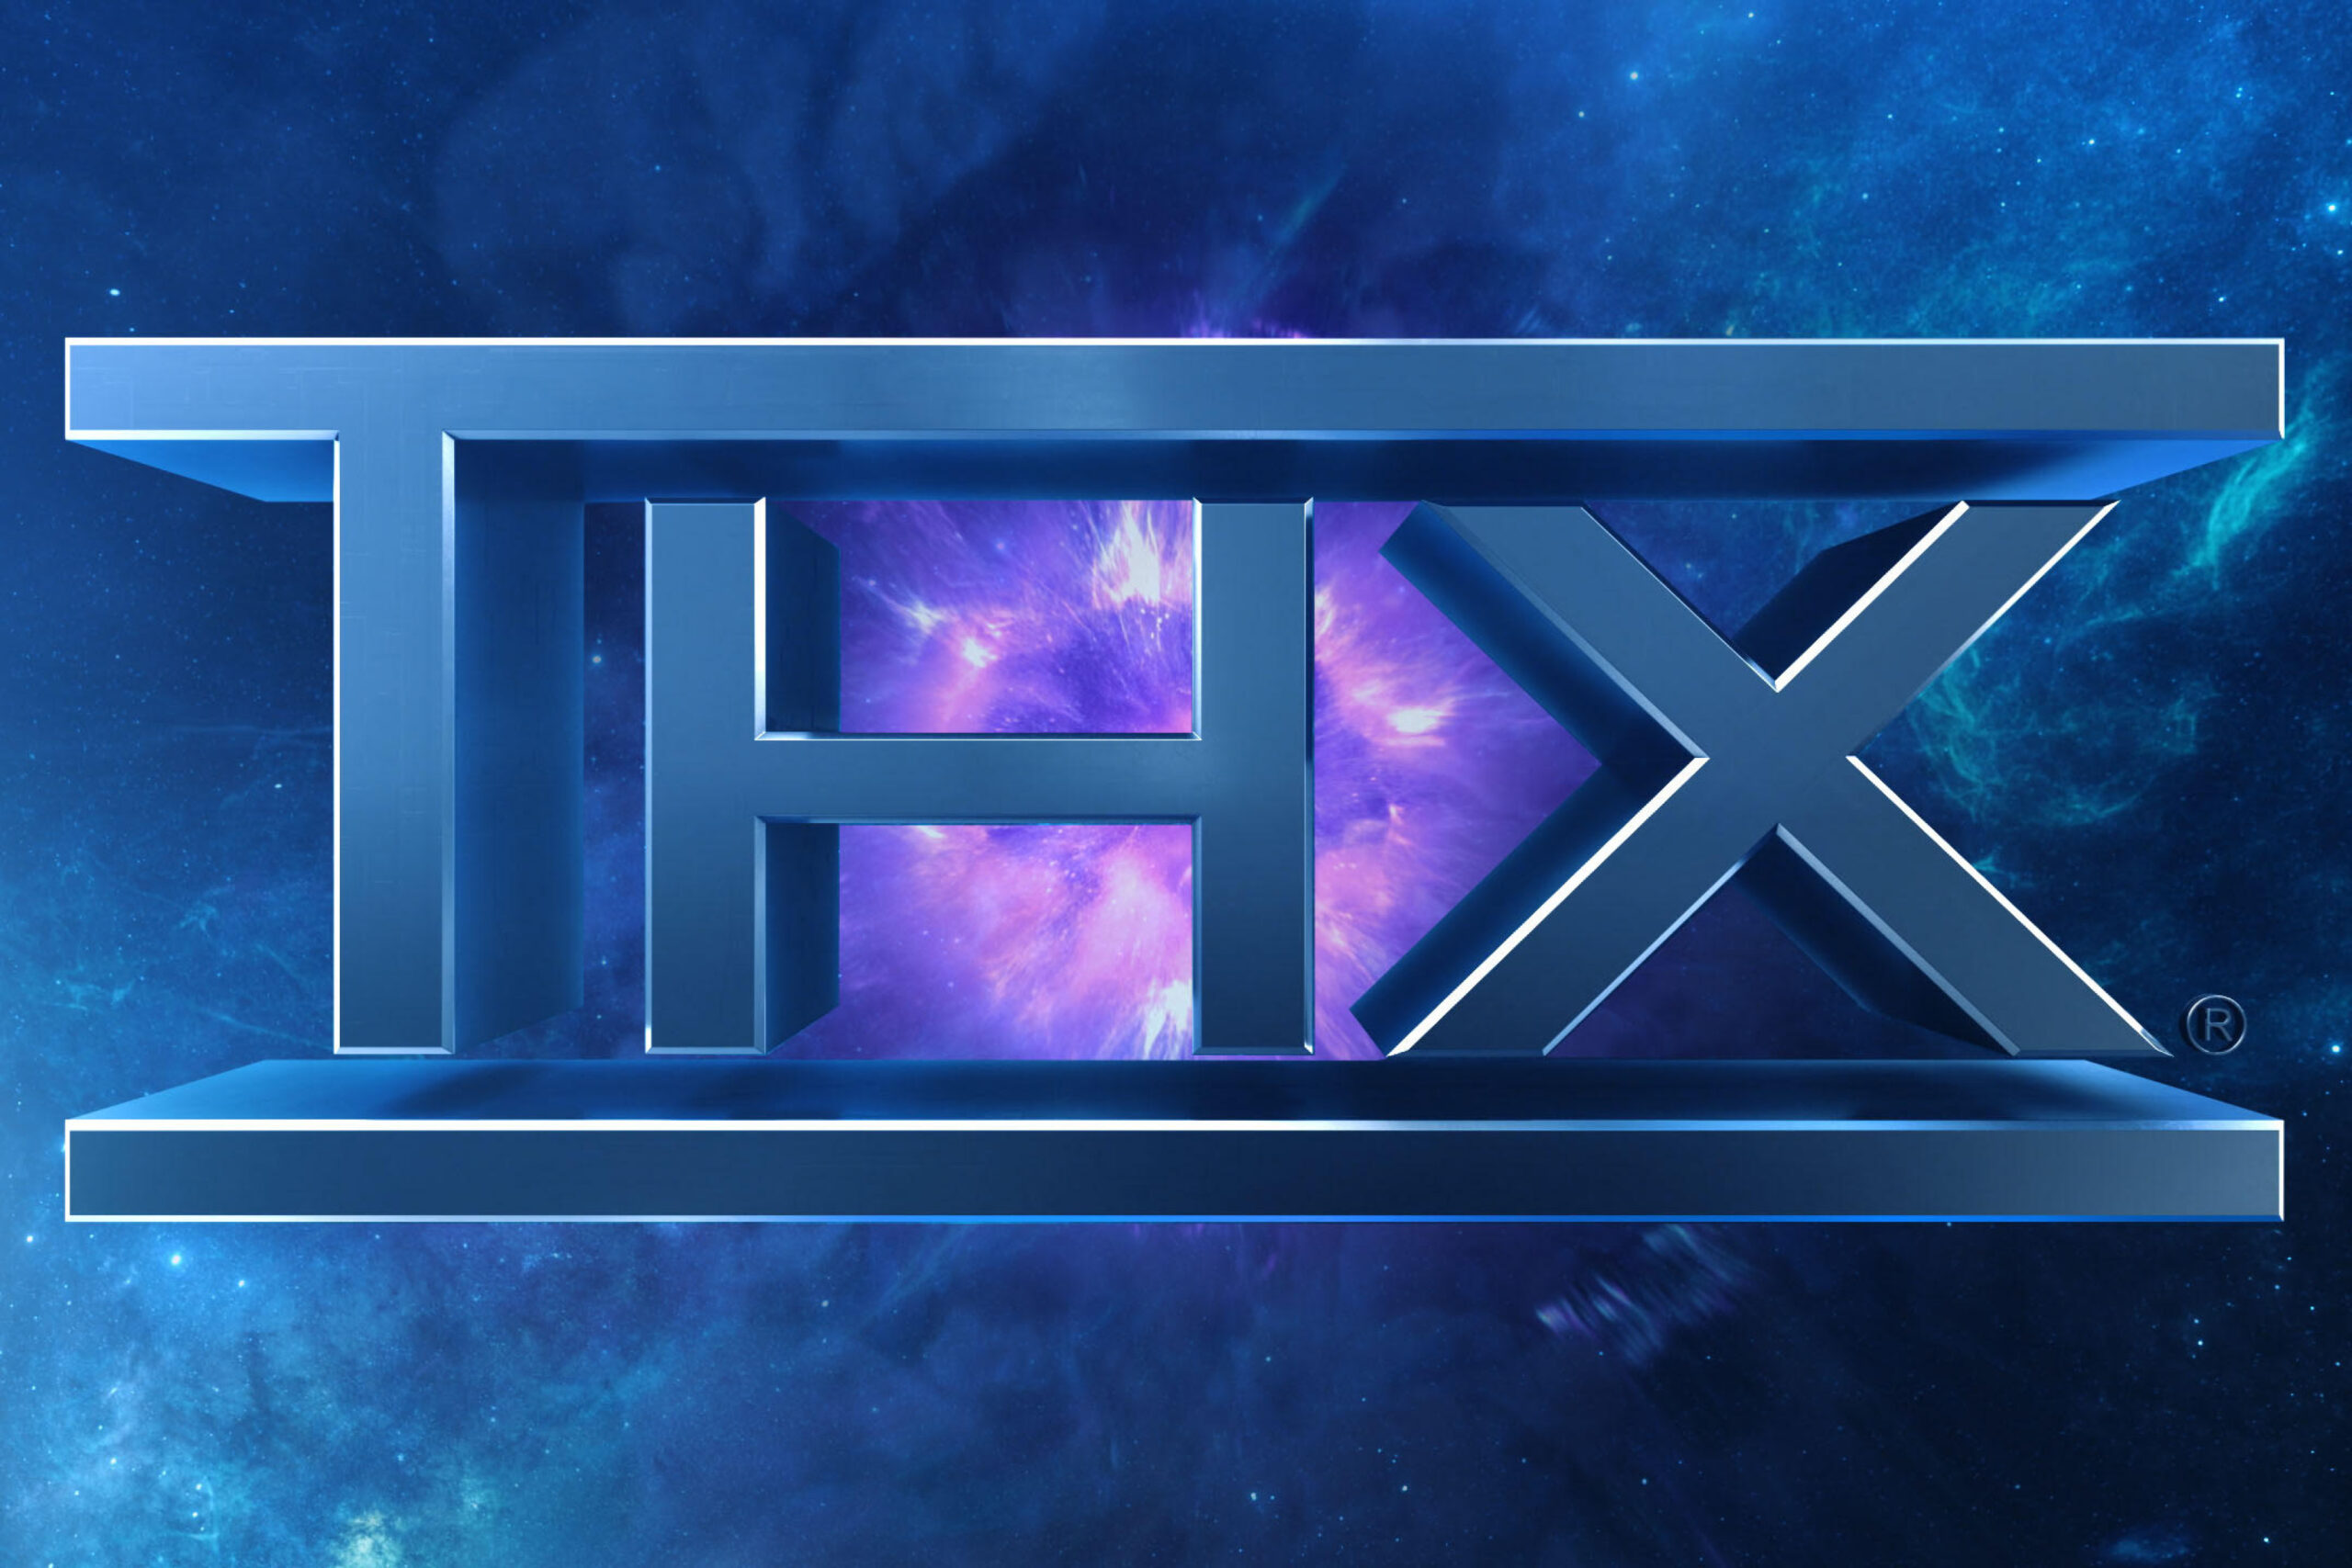 THX logo from Genesis trailer